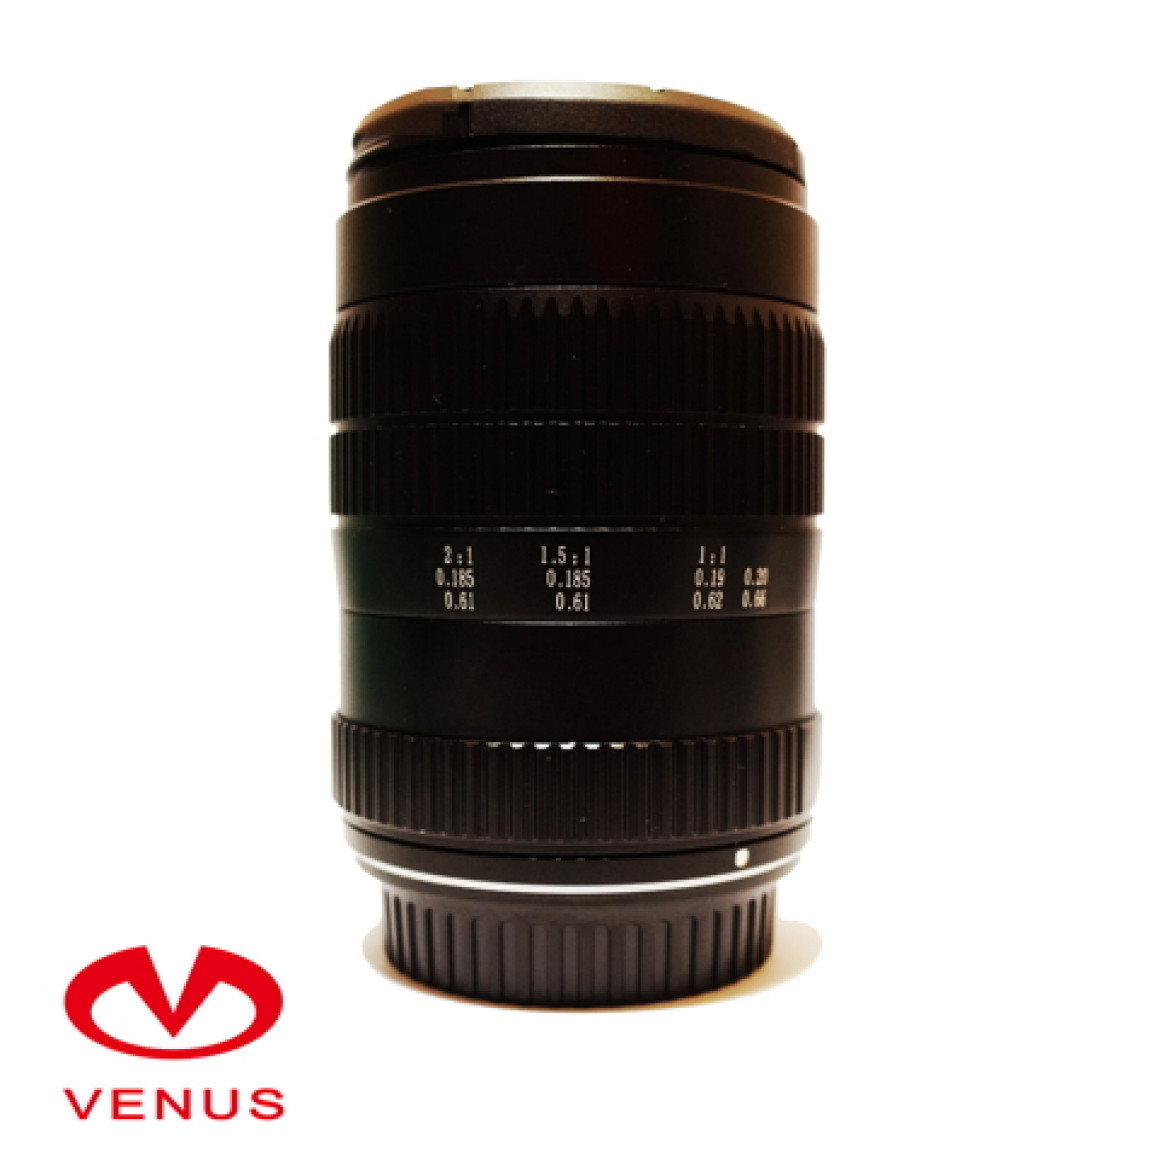 Venus 60mm f/2.8 Ultra Macro